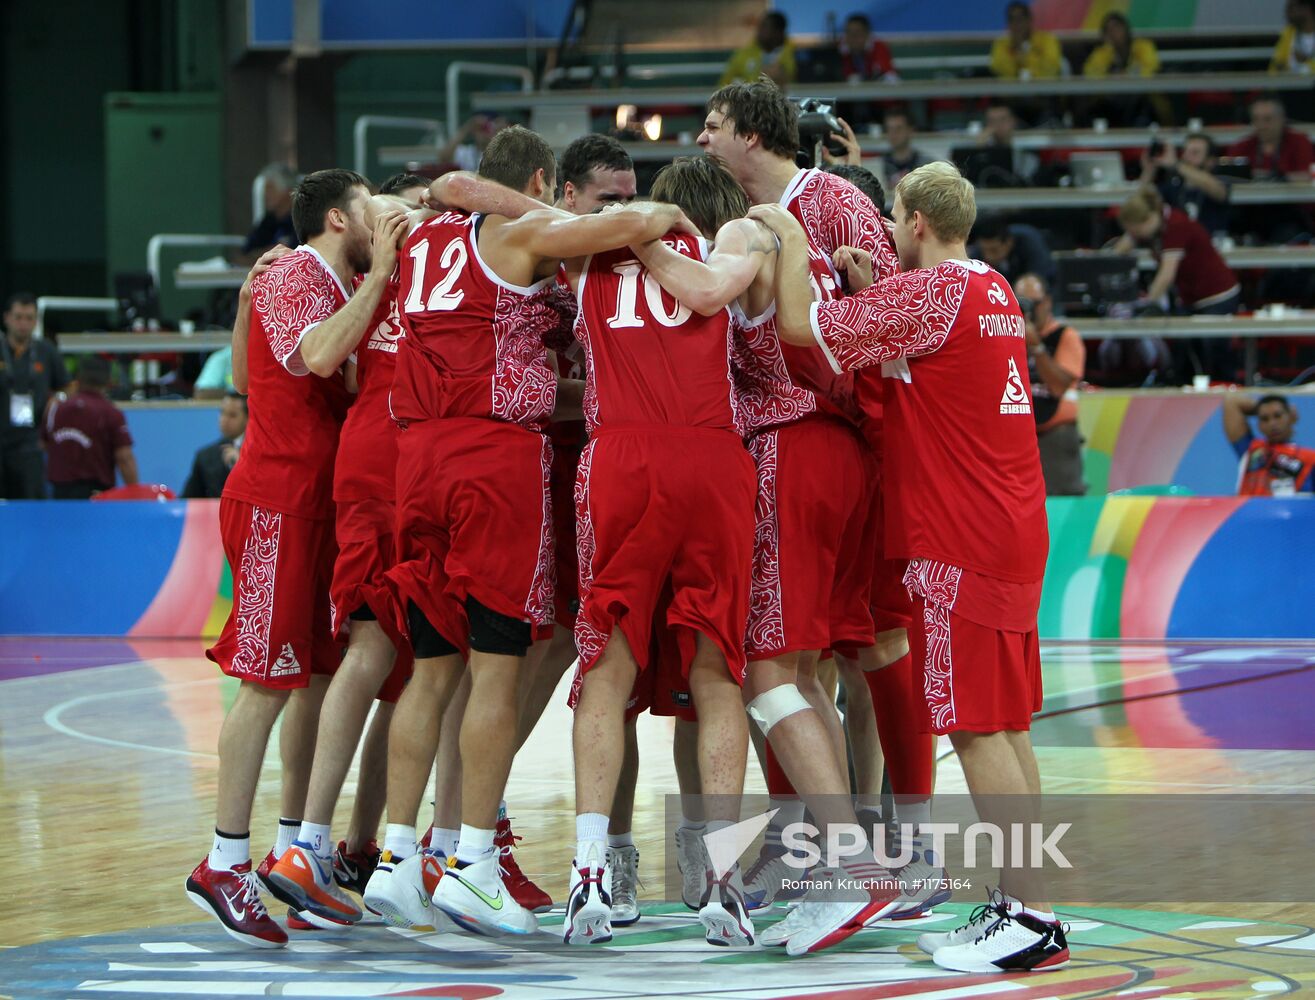 Basketball. 2012 Olympic Games Qualifying. Russia vs. Nigeria